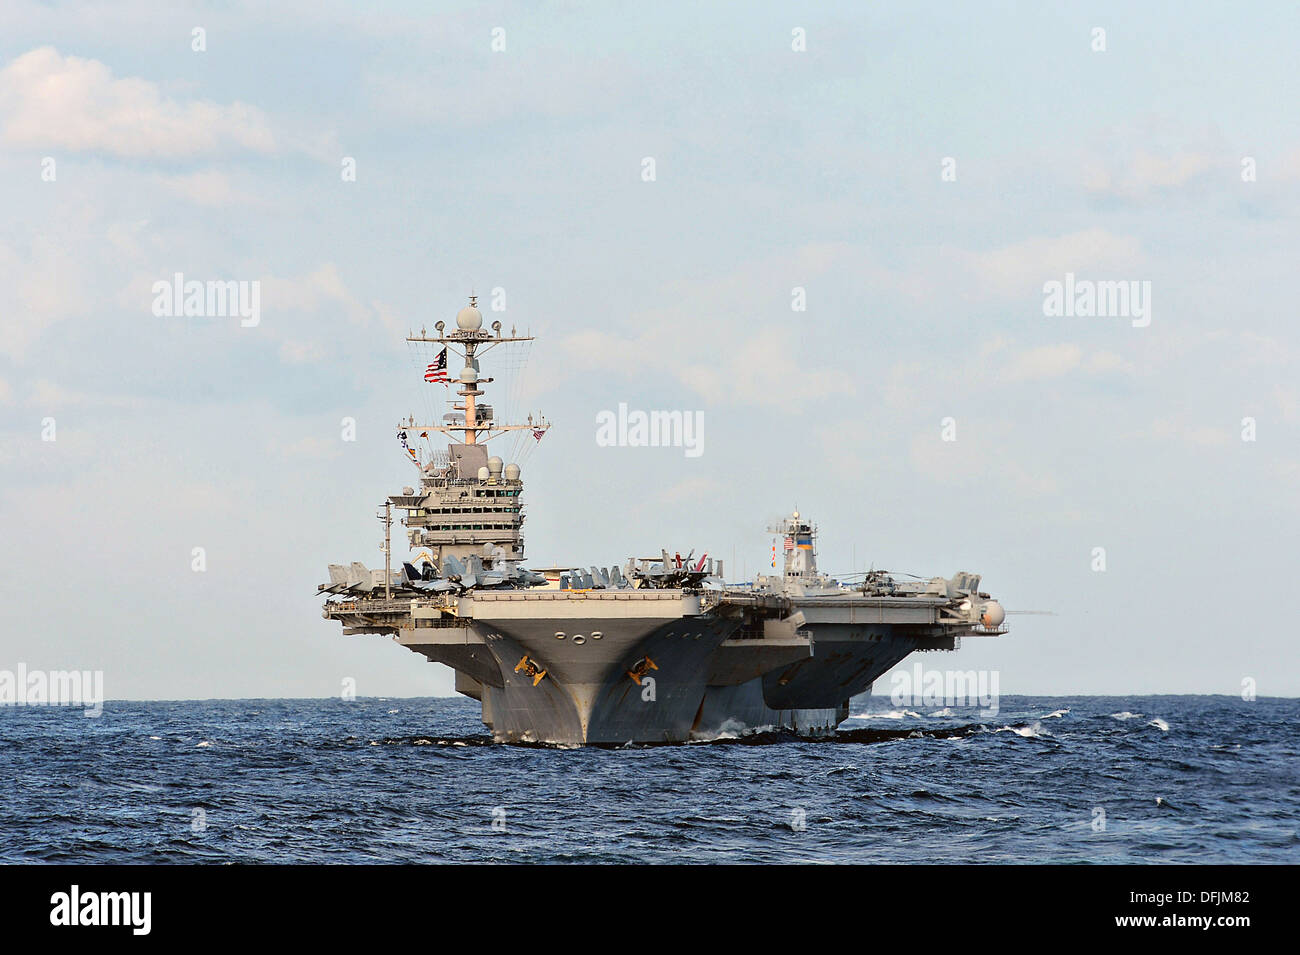 US Marine Flugzeugträger USS George Washington bewegt in Formation beim Training Übung 3. Oktober 2013 entlang dem Meer von Japan. Stockfoto